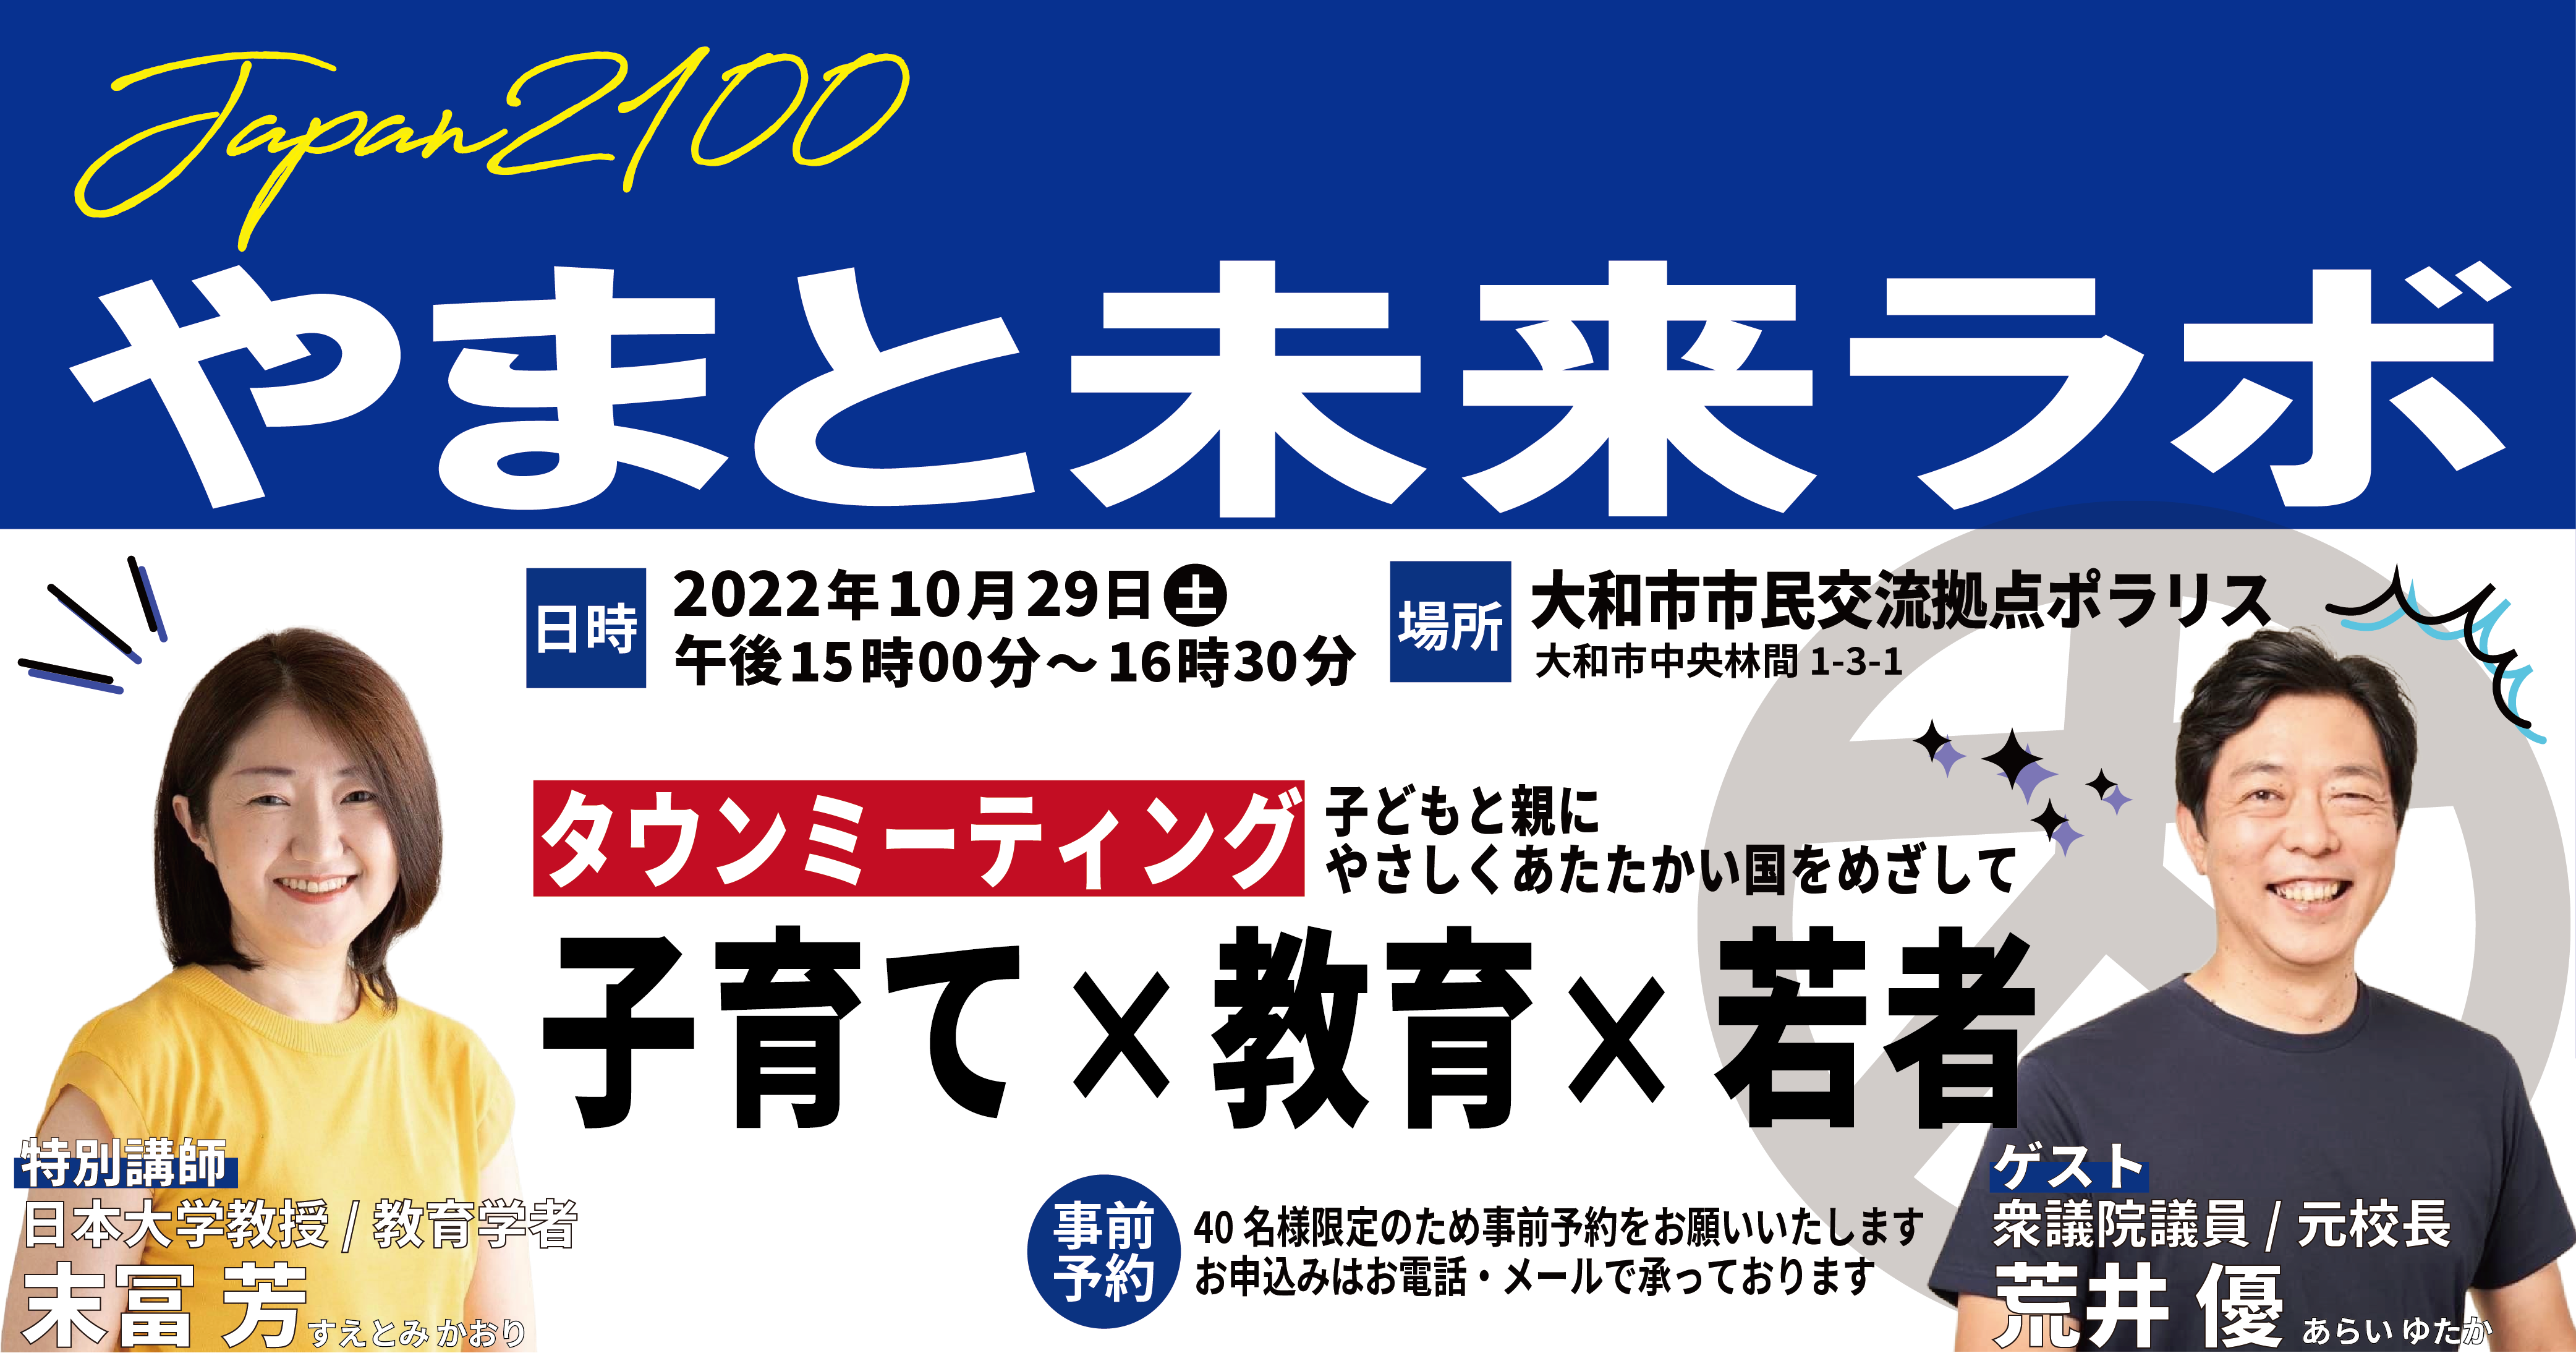 Japan2100「やまと未来ラボ」研究会開催報告：第9回